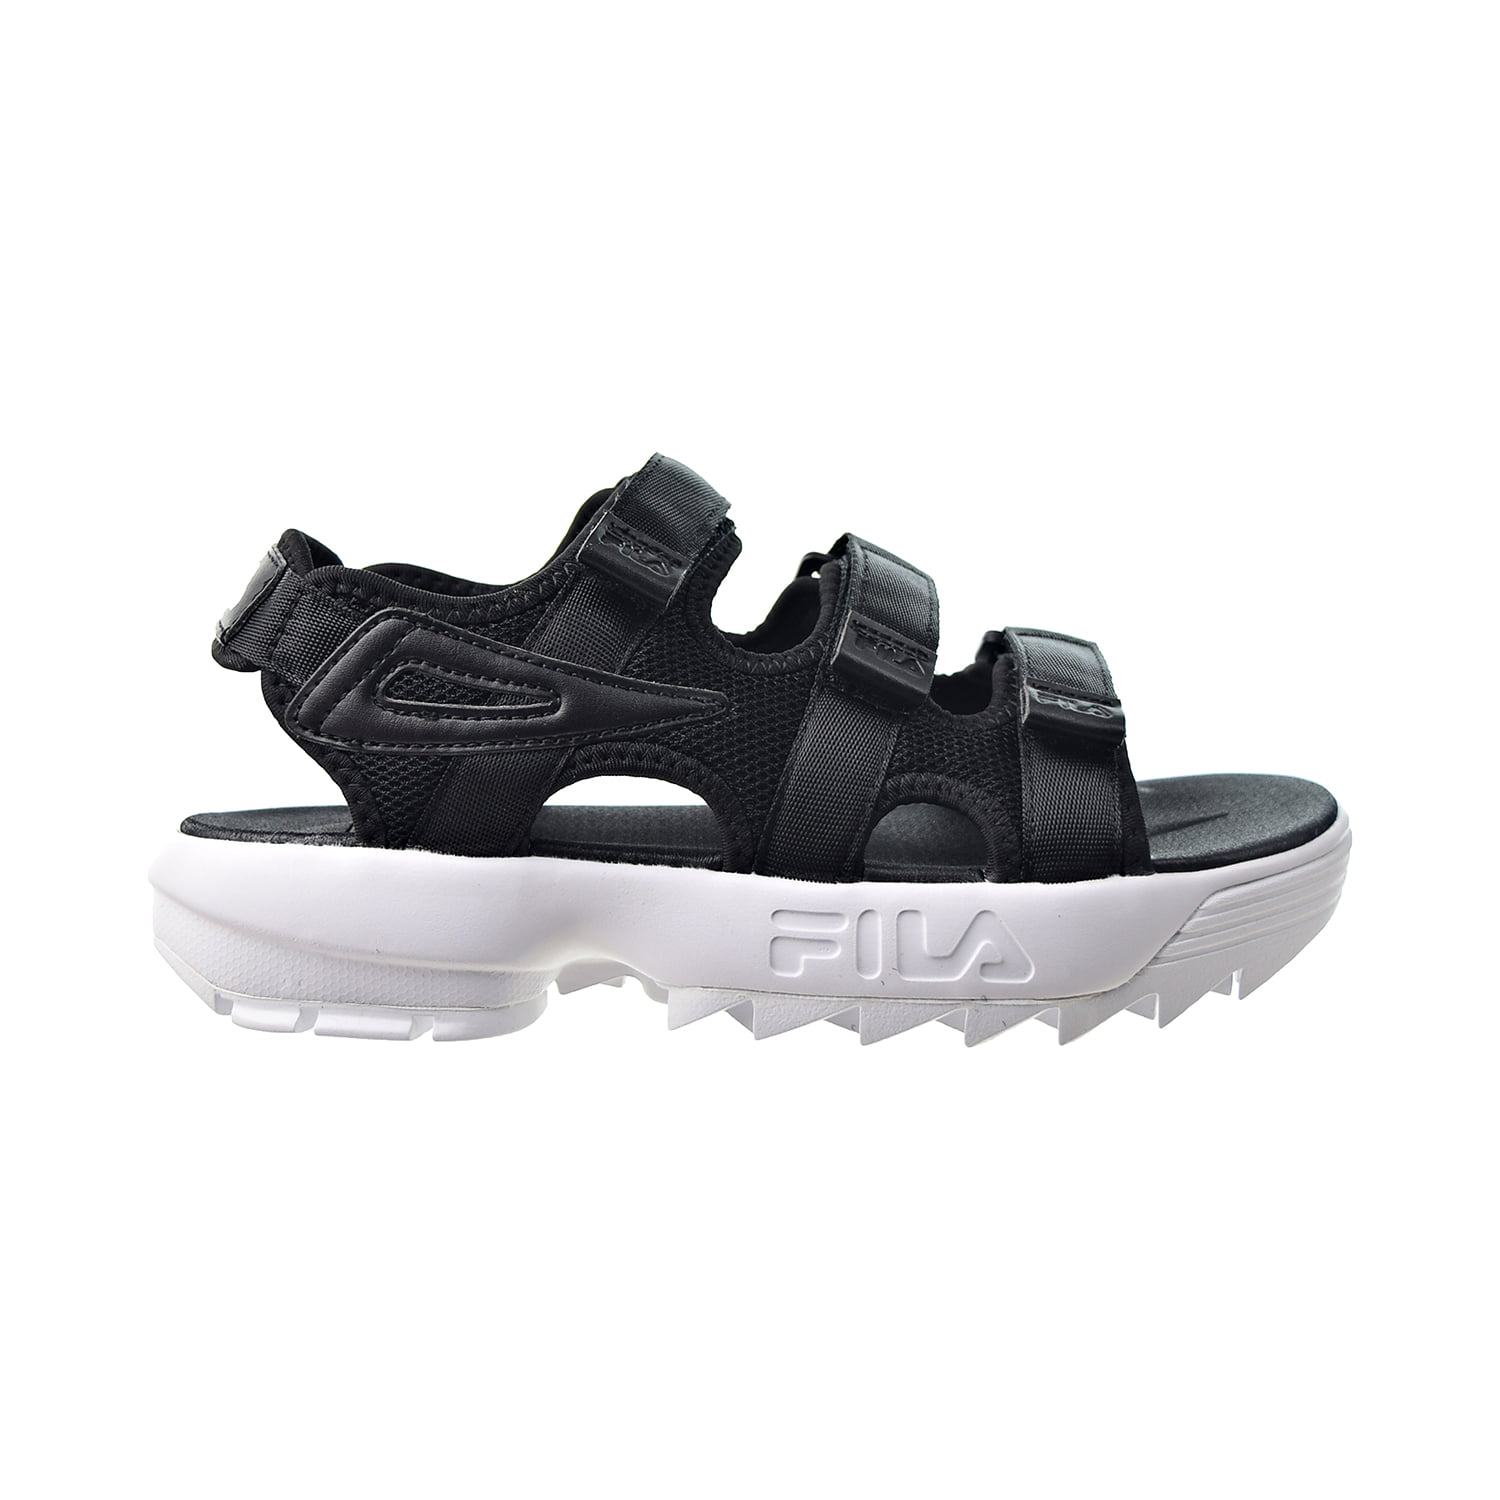 Fila Sandals in Pakistan Open Toe Durable Lightweight 3 Color White Black  Brown  Arad Branding